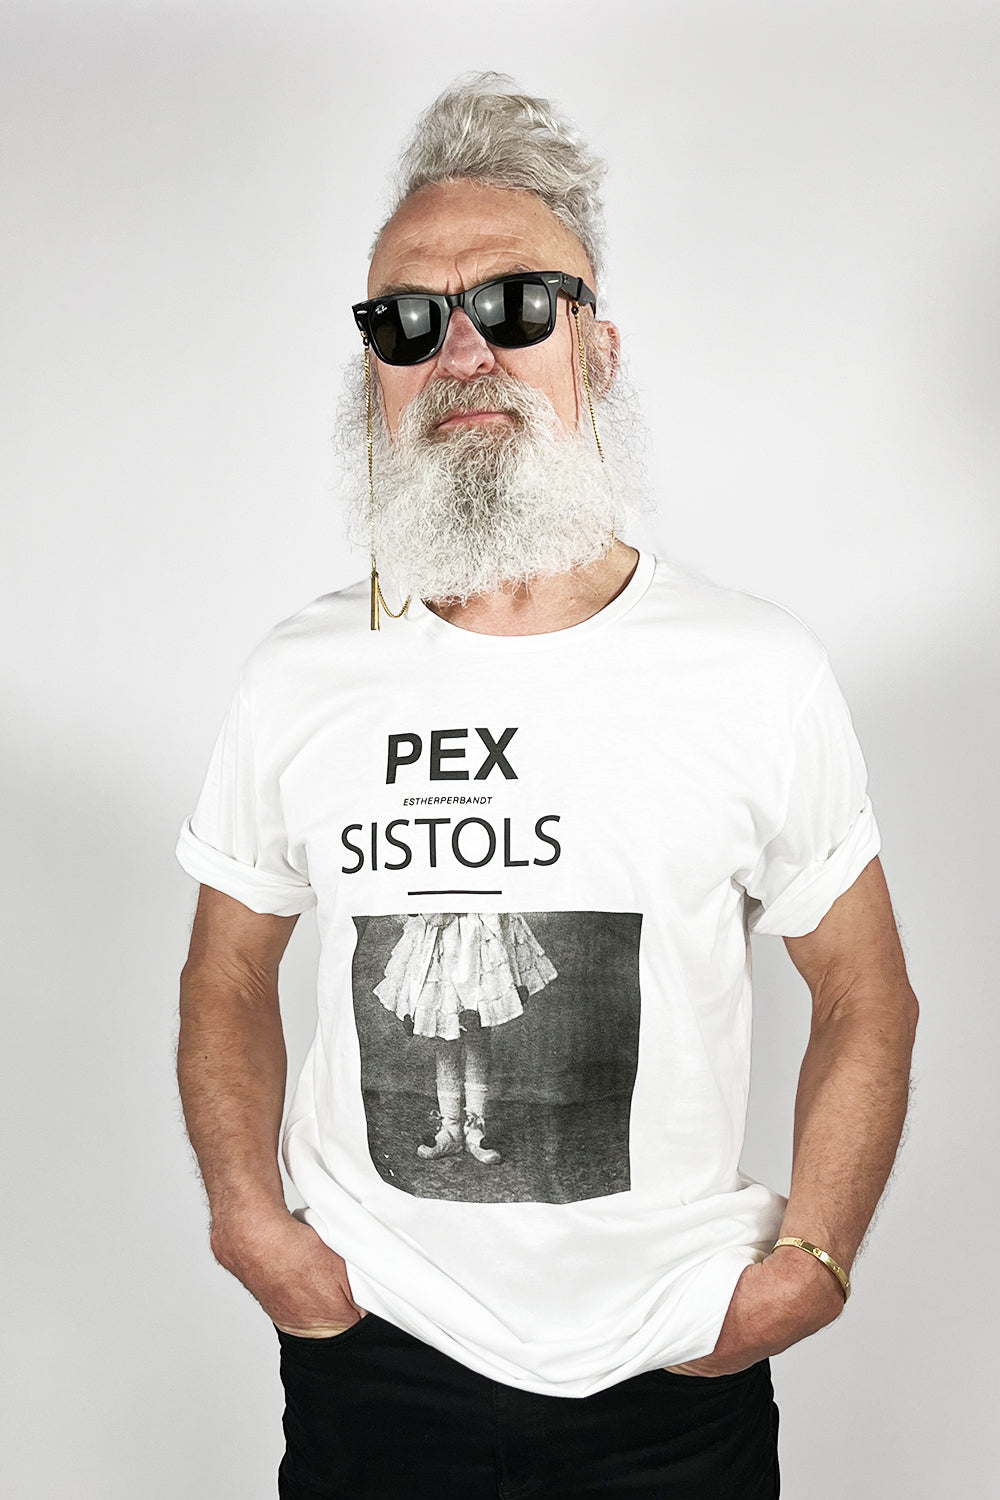 PEX SISTOLS - Statement T-shirt - Men